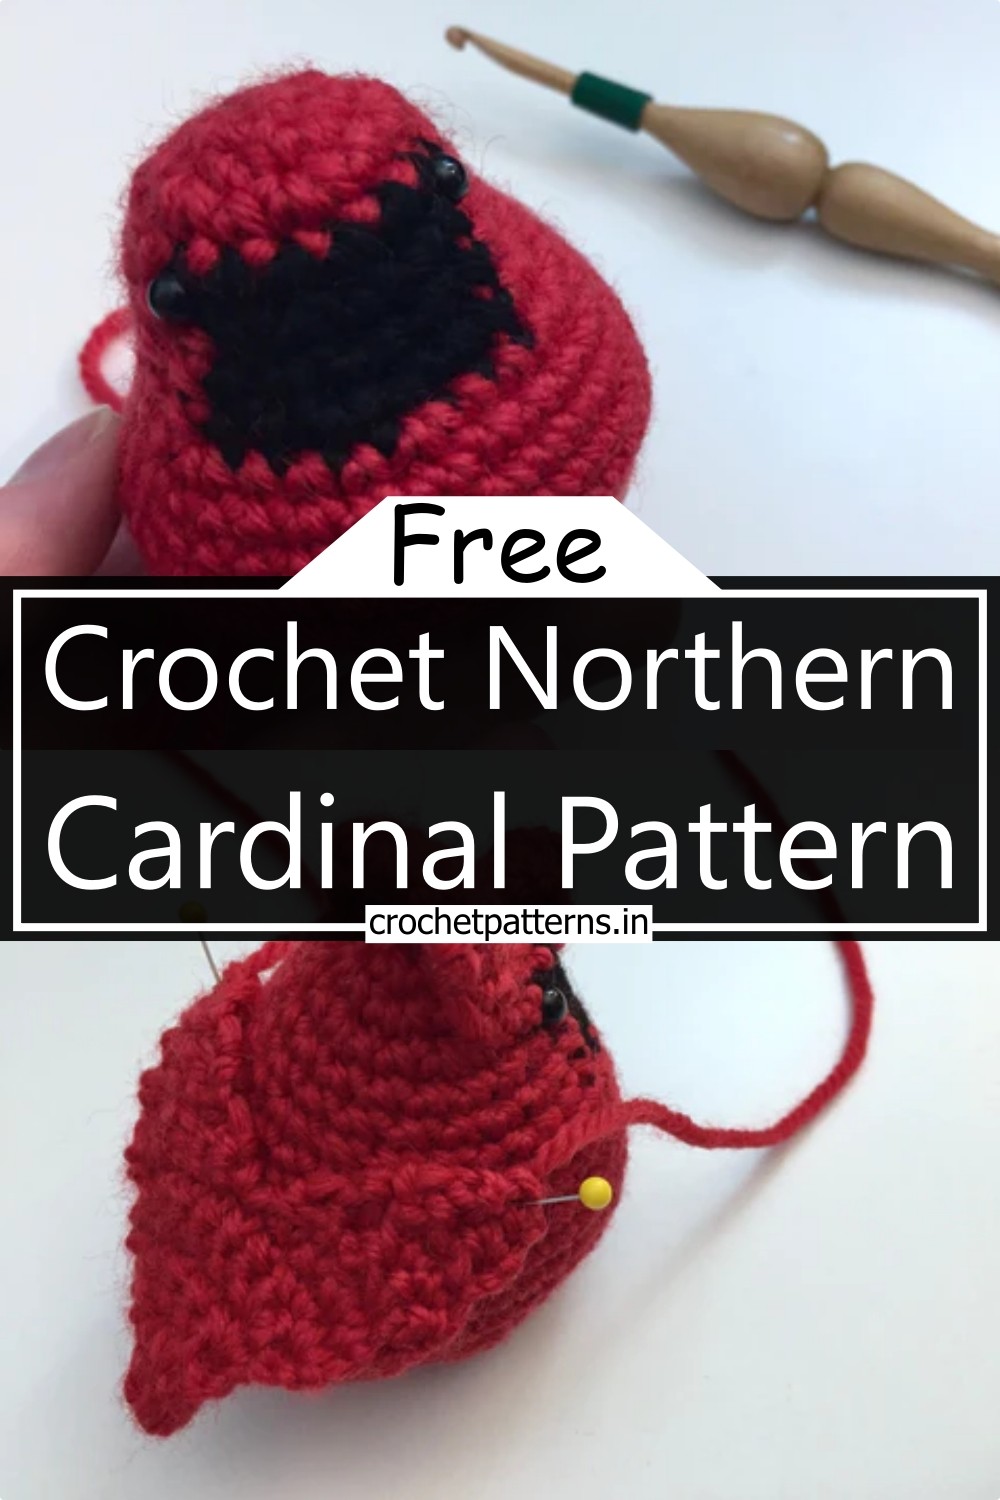 Crochet Northern Cardinal Pattern